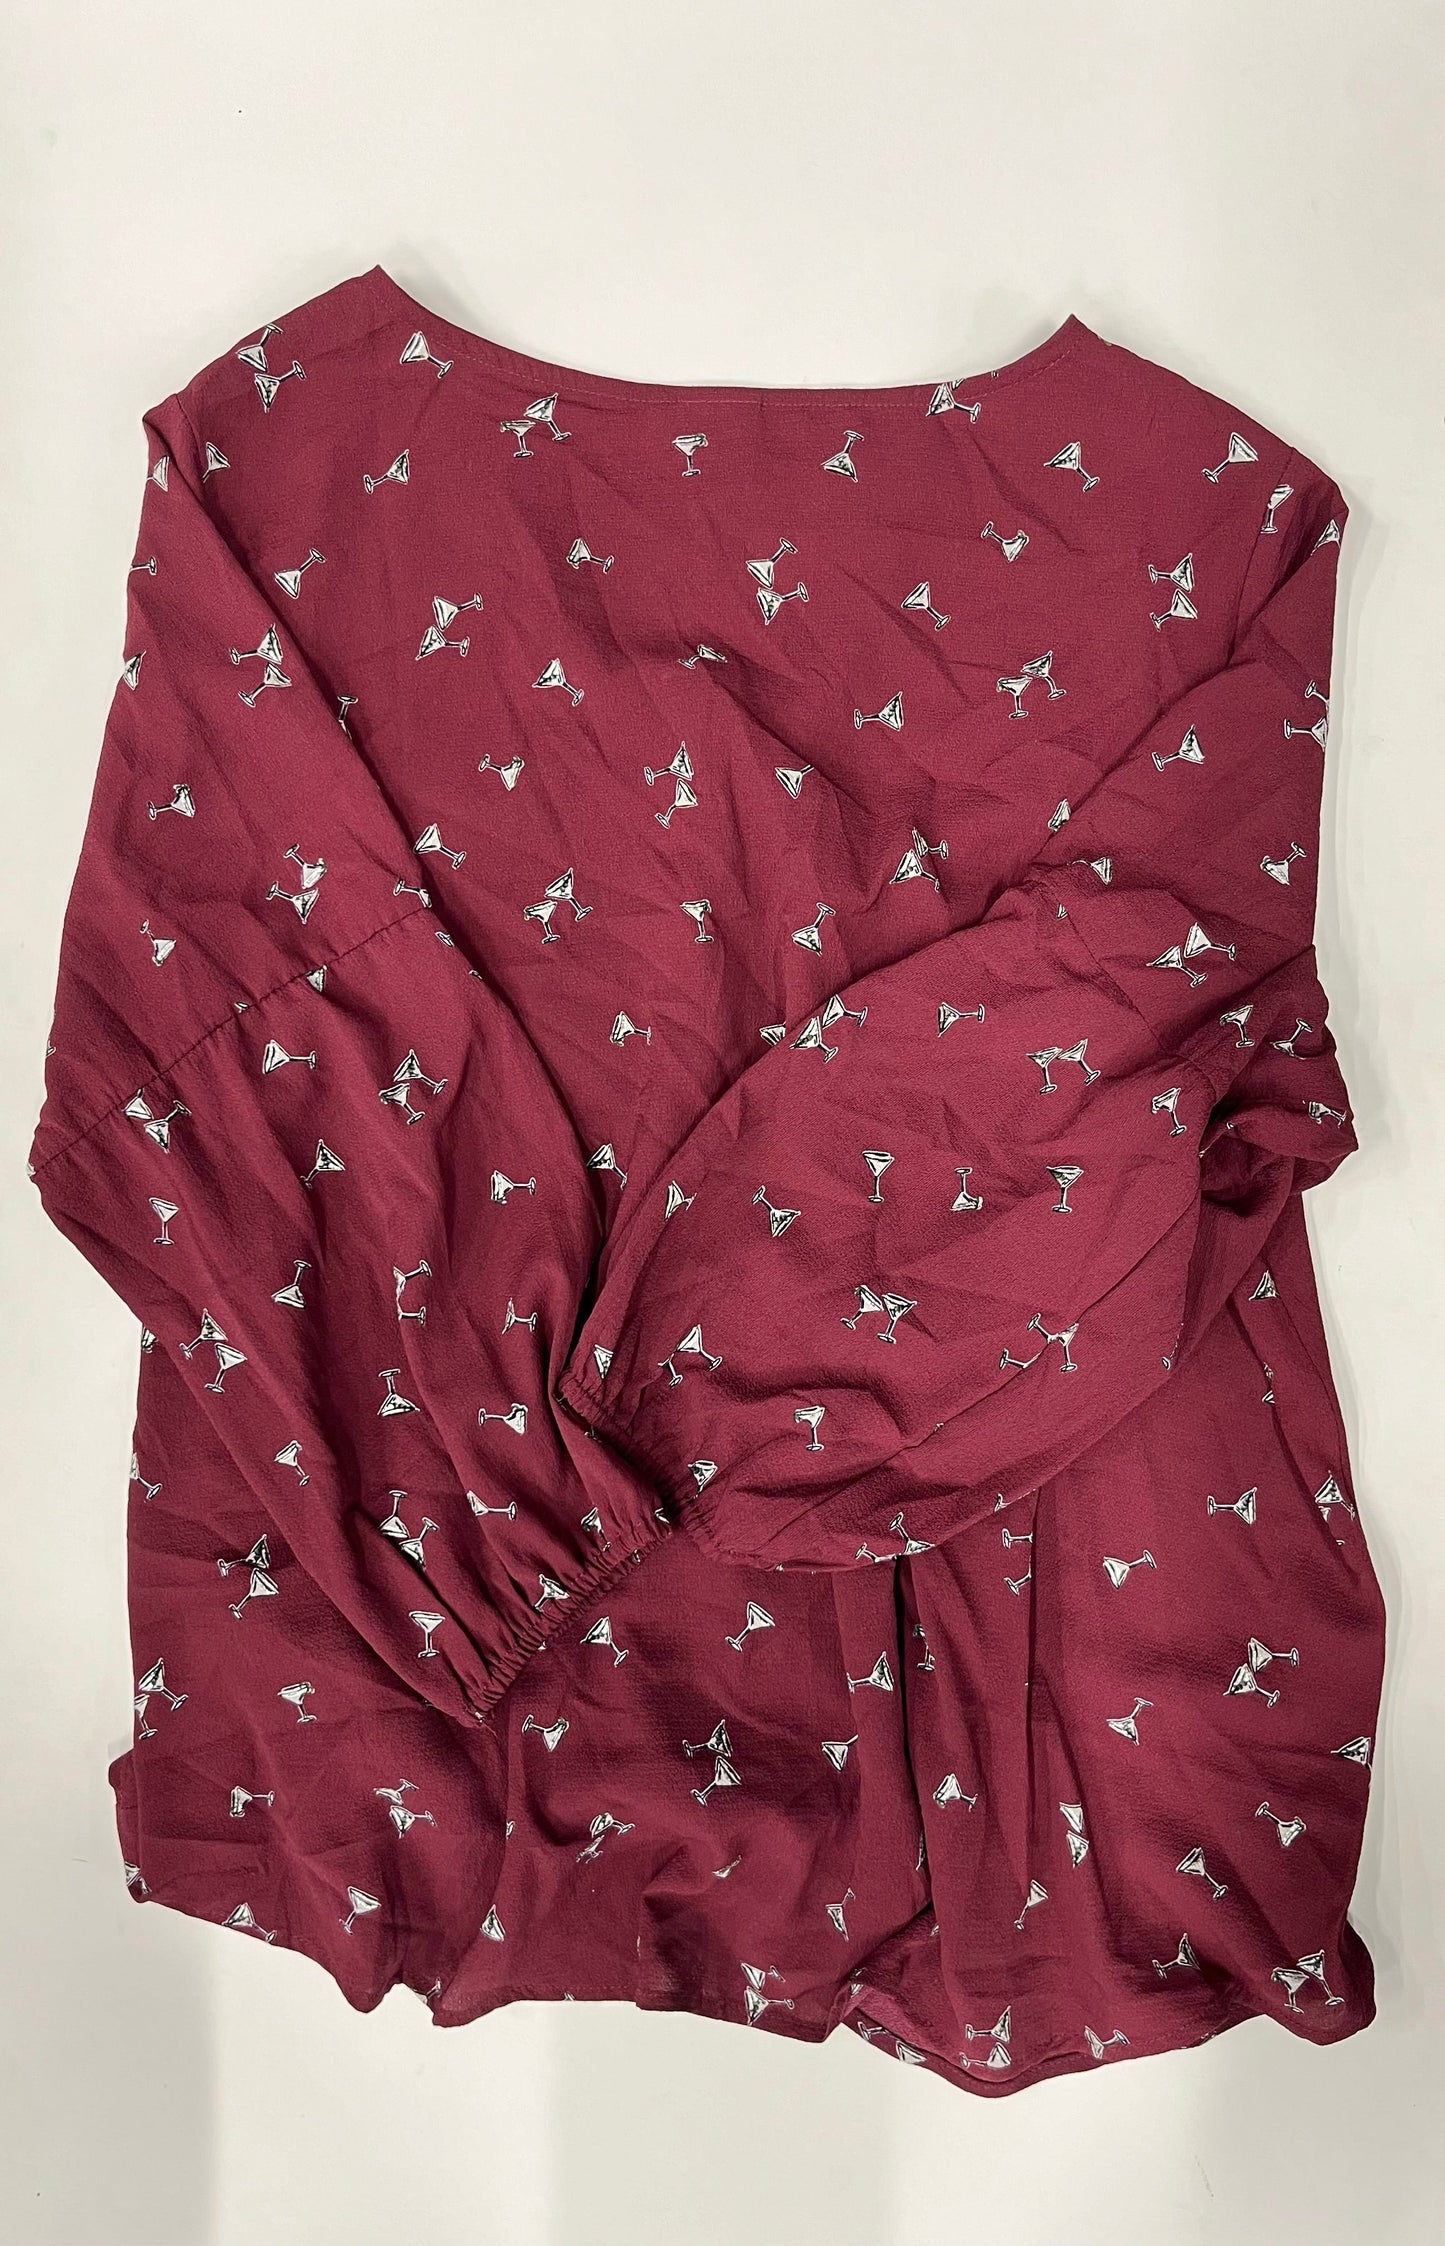 Blouse Long Sleeve By Dressbarn NWT Size: 3x